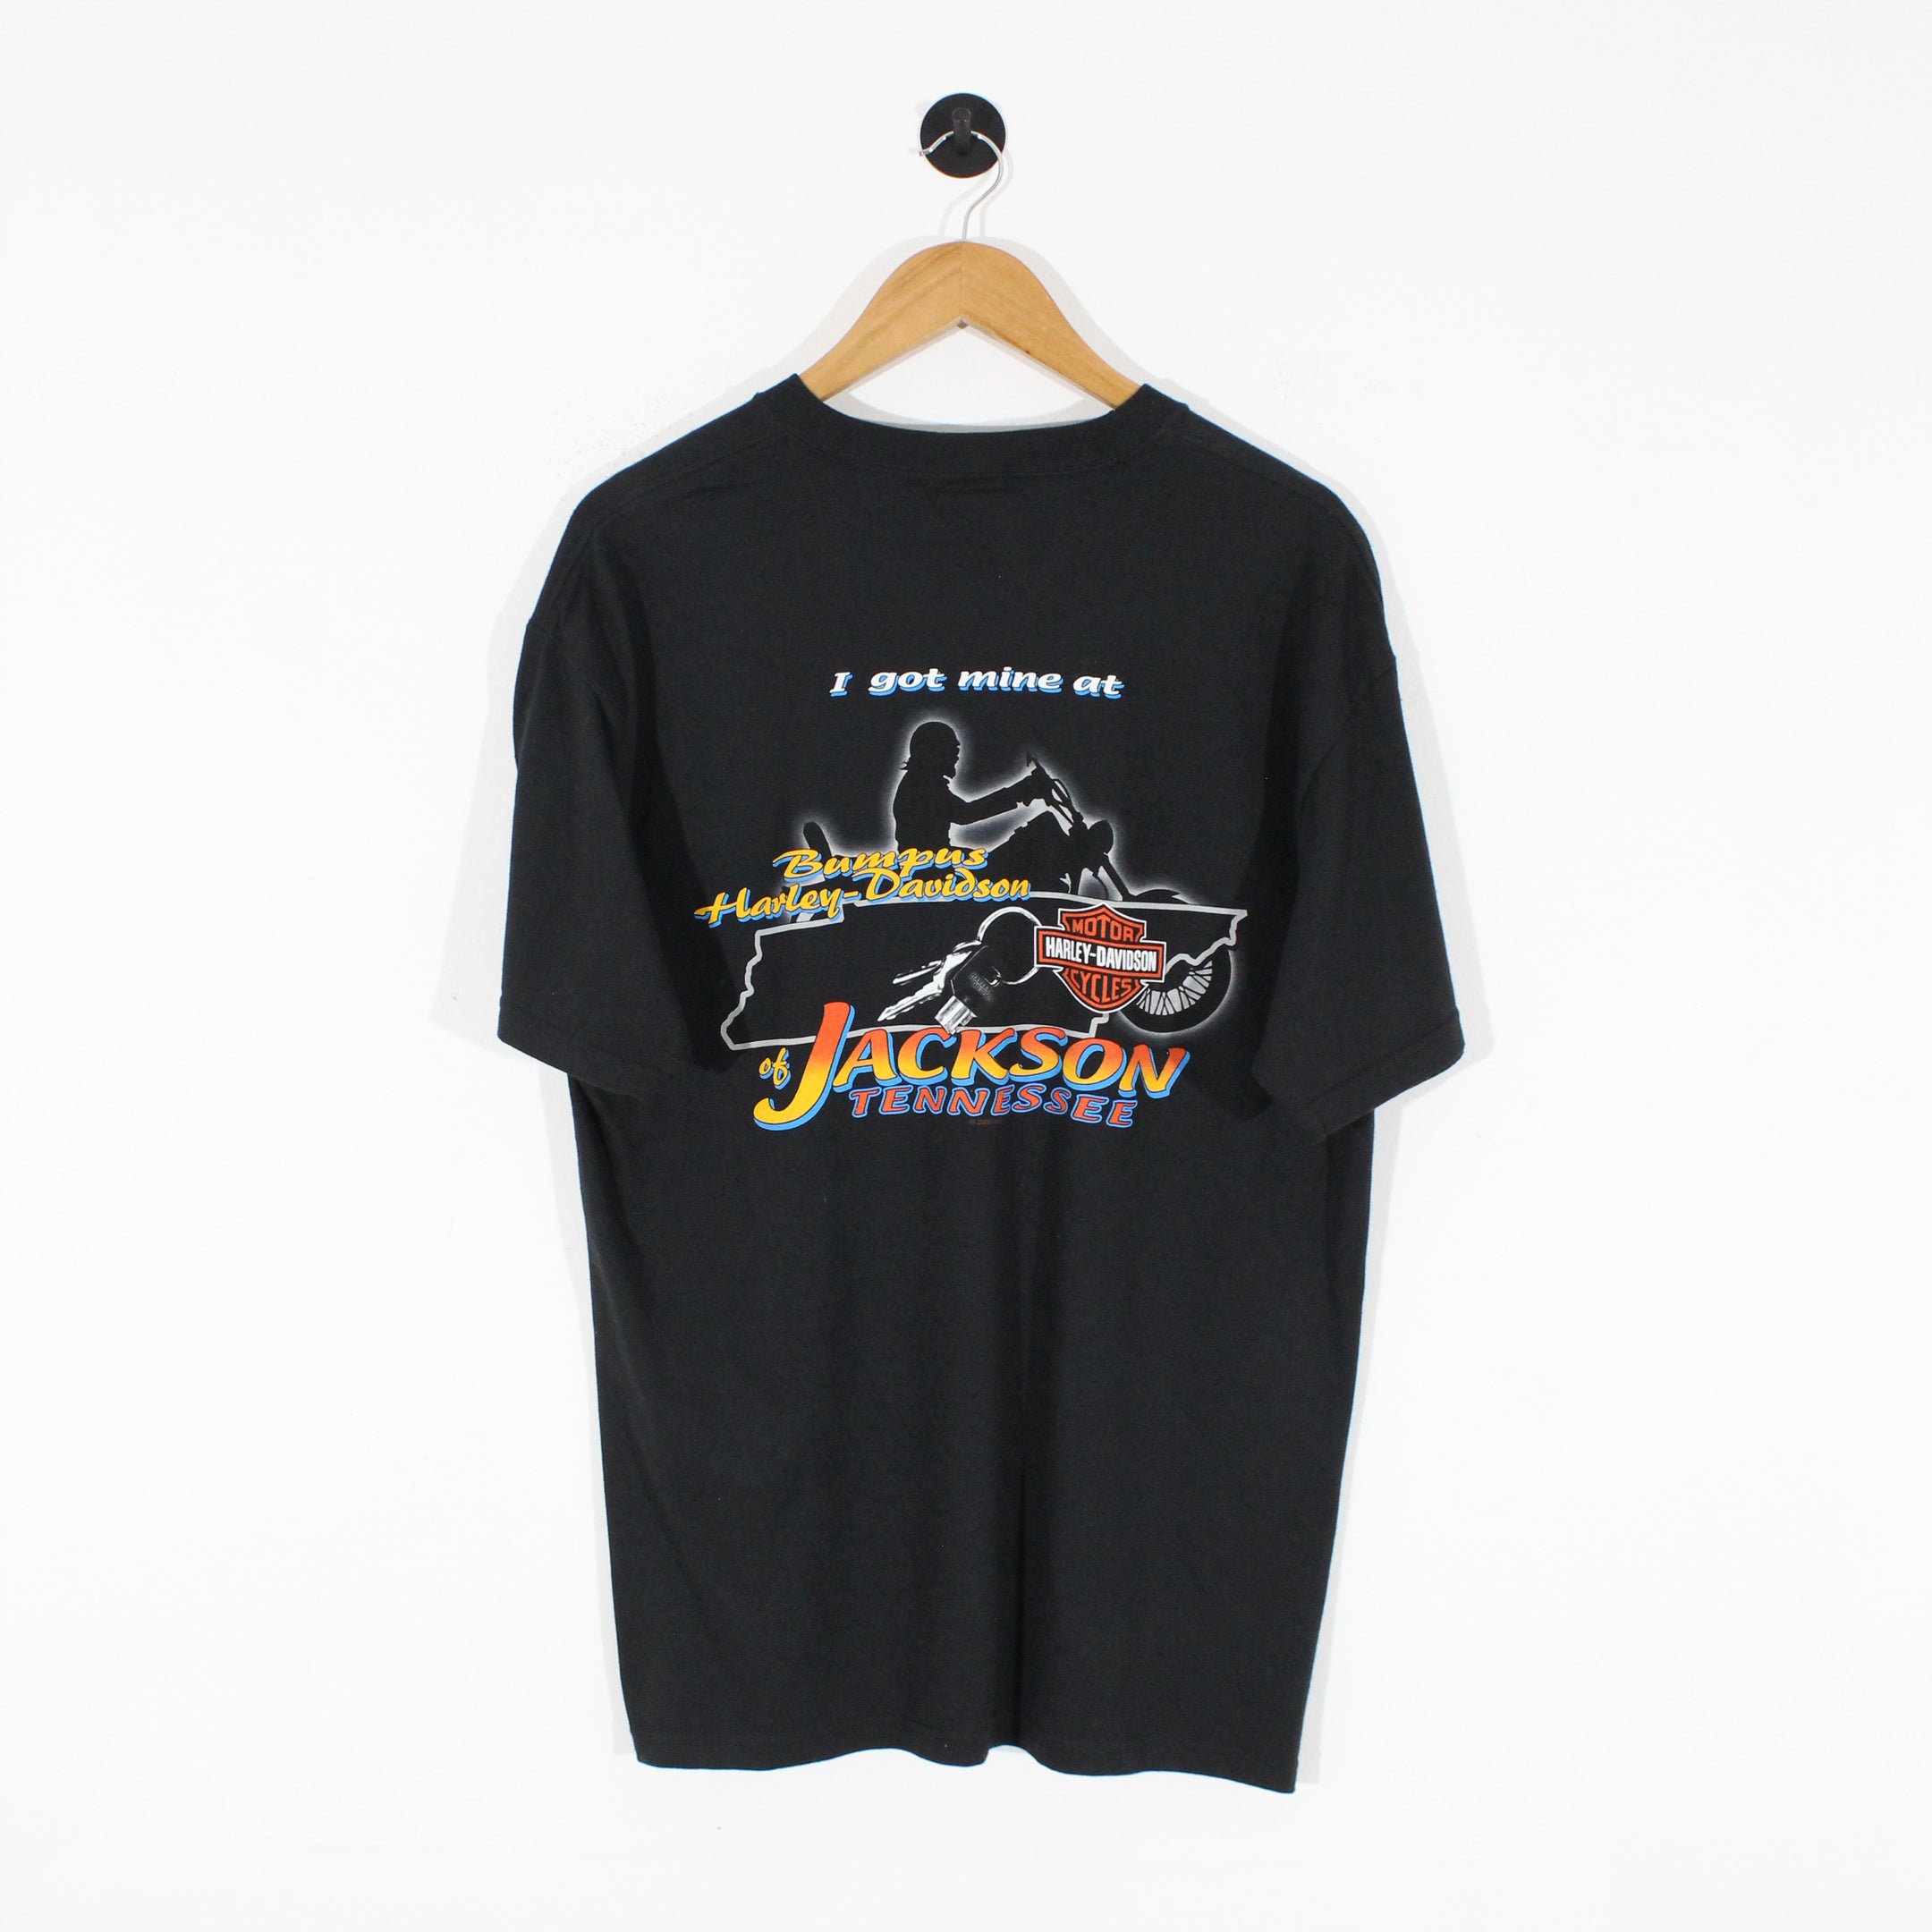 Harley Davidson Jackson Tennessee Printed T-Shirt (L)